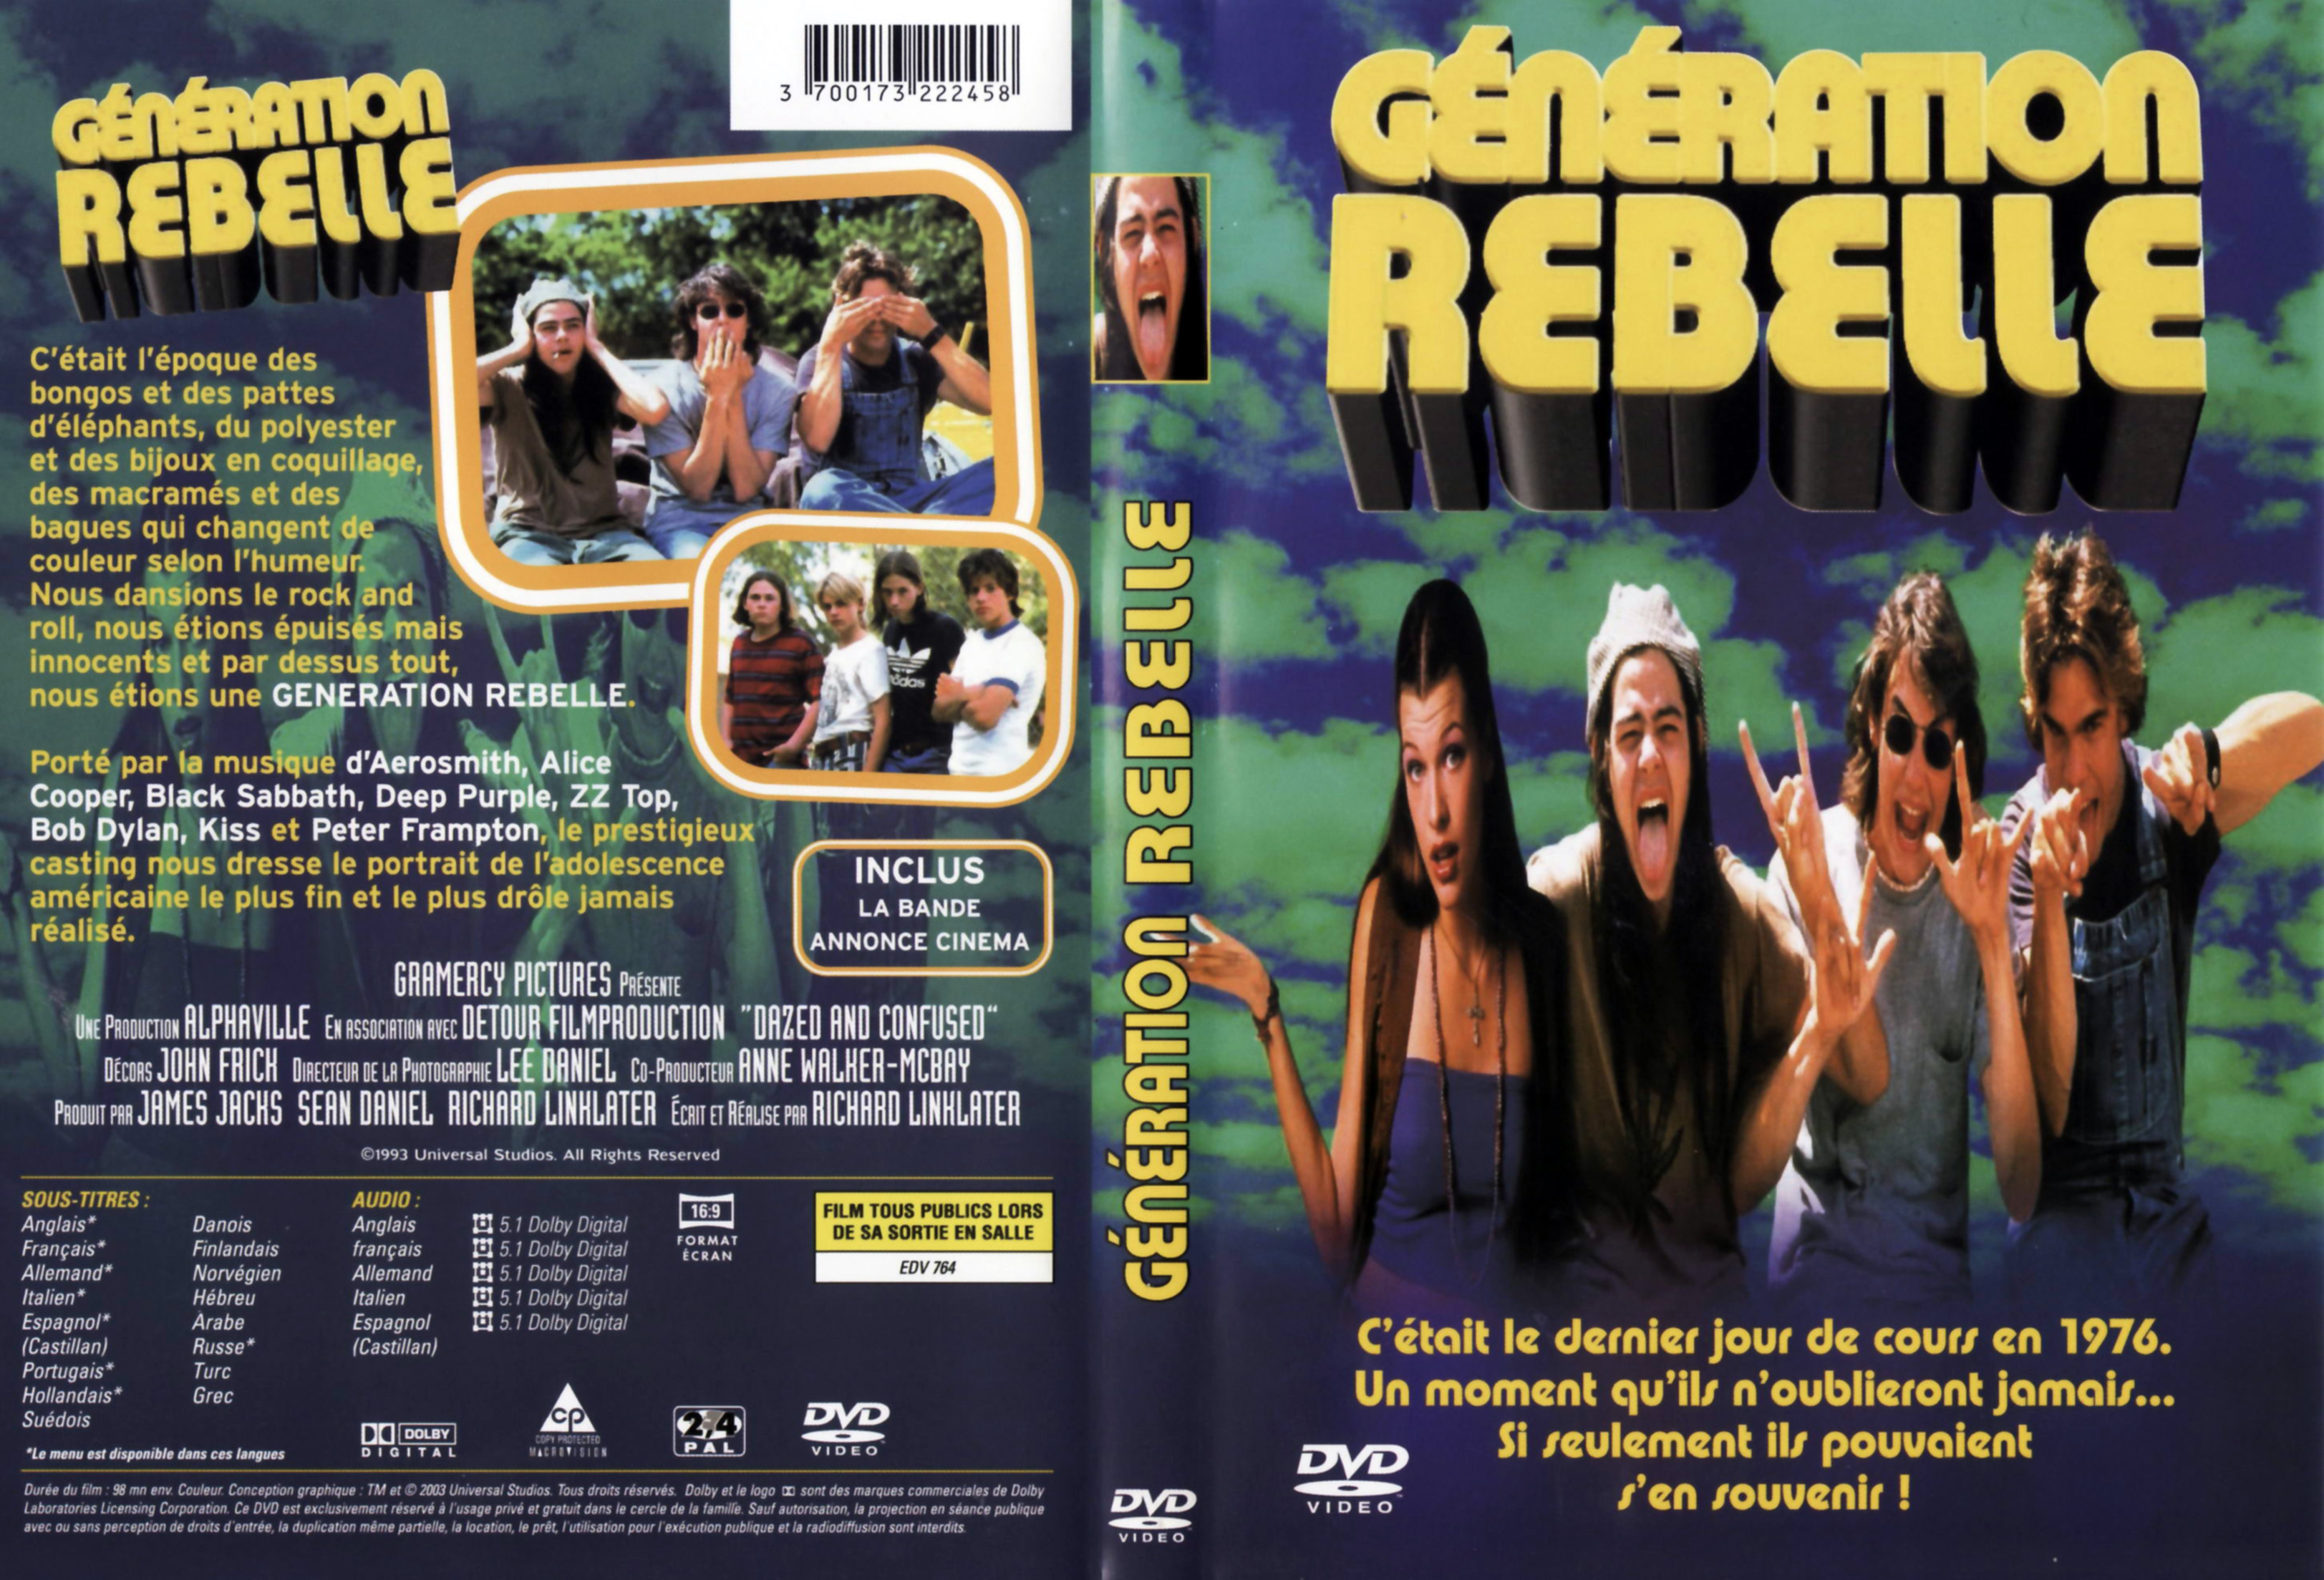 Jaquette DVD Generation rebelle